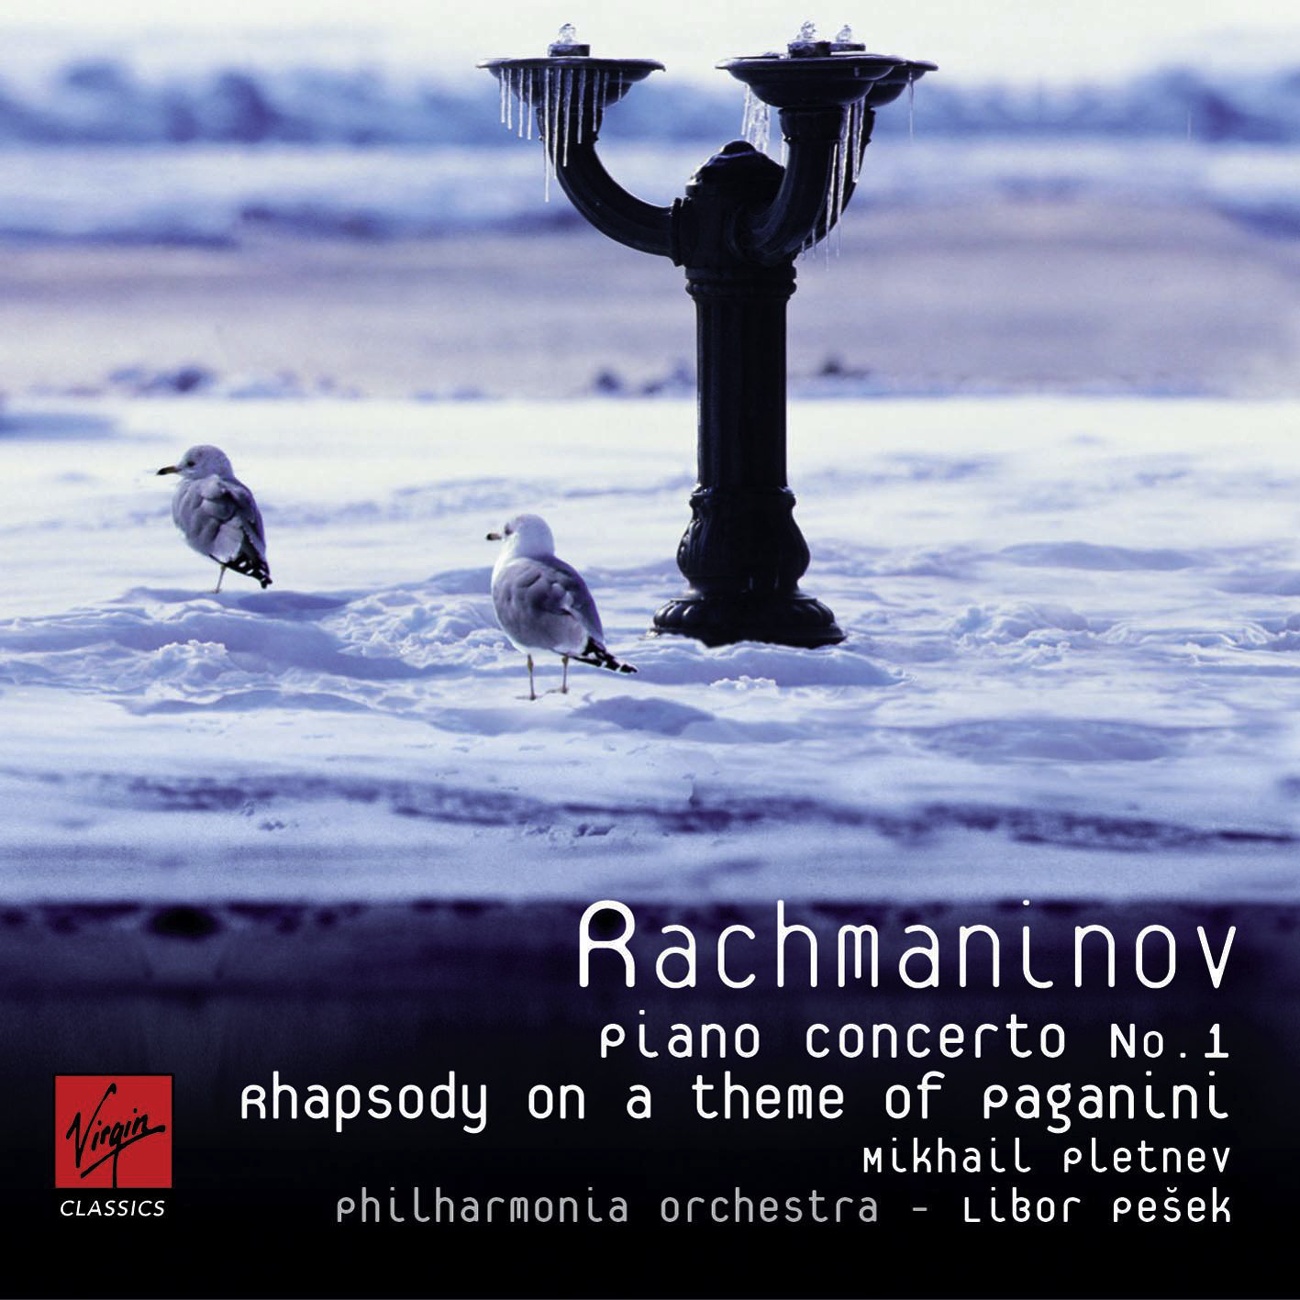 Rhapsody on a Theme of Paganini: Variation XIV - L'istesso tempo